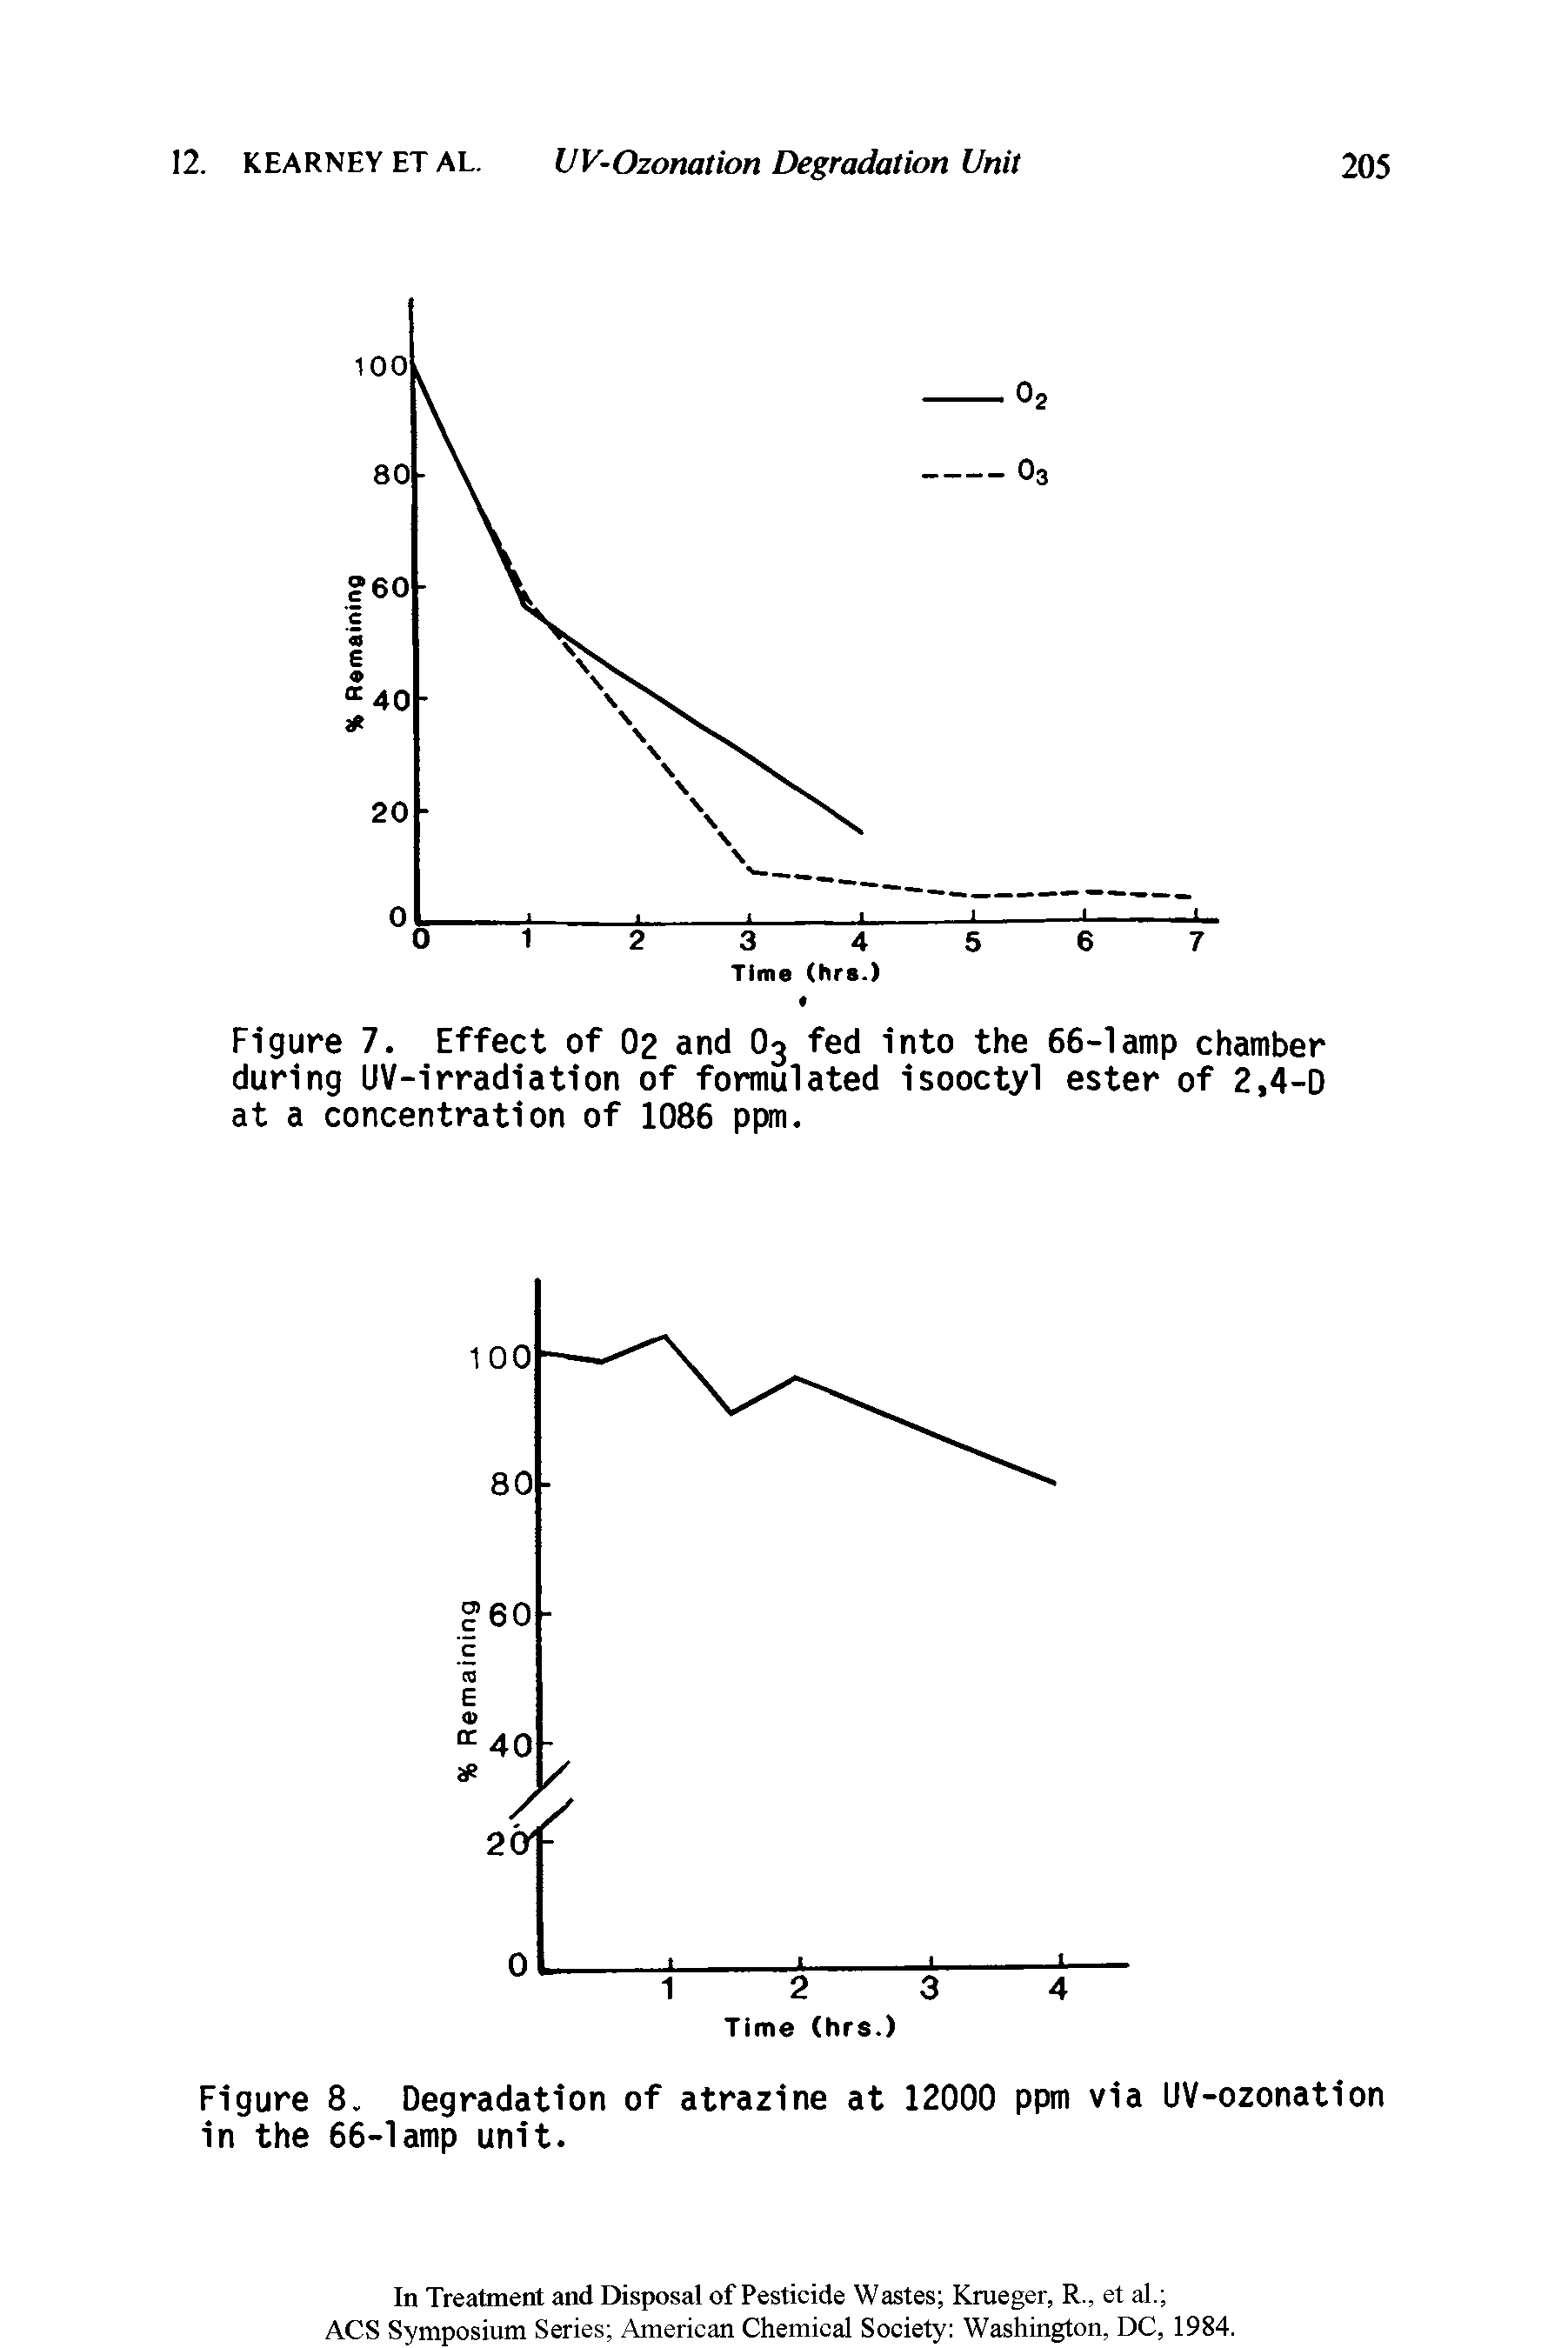 Figure 8. Degradation of atrazine at 12000 ppm via UV-ozonation in the 66-lamp unit.